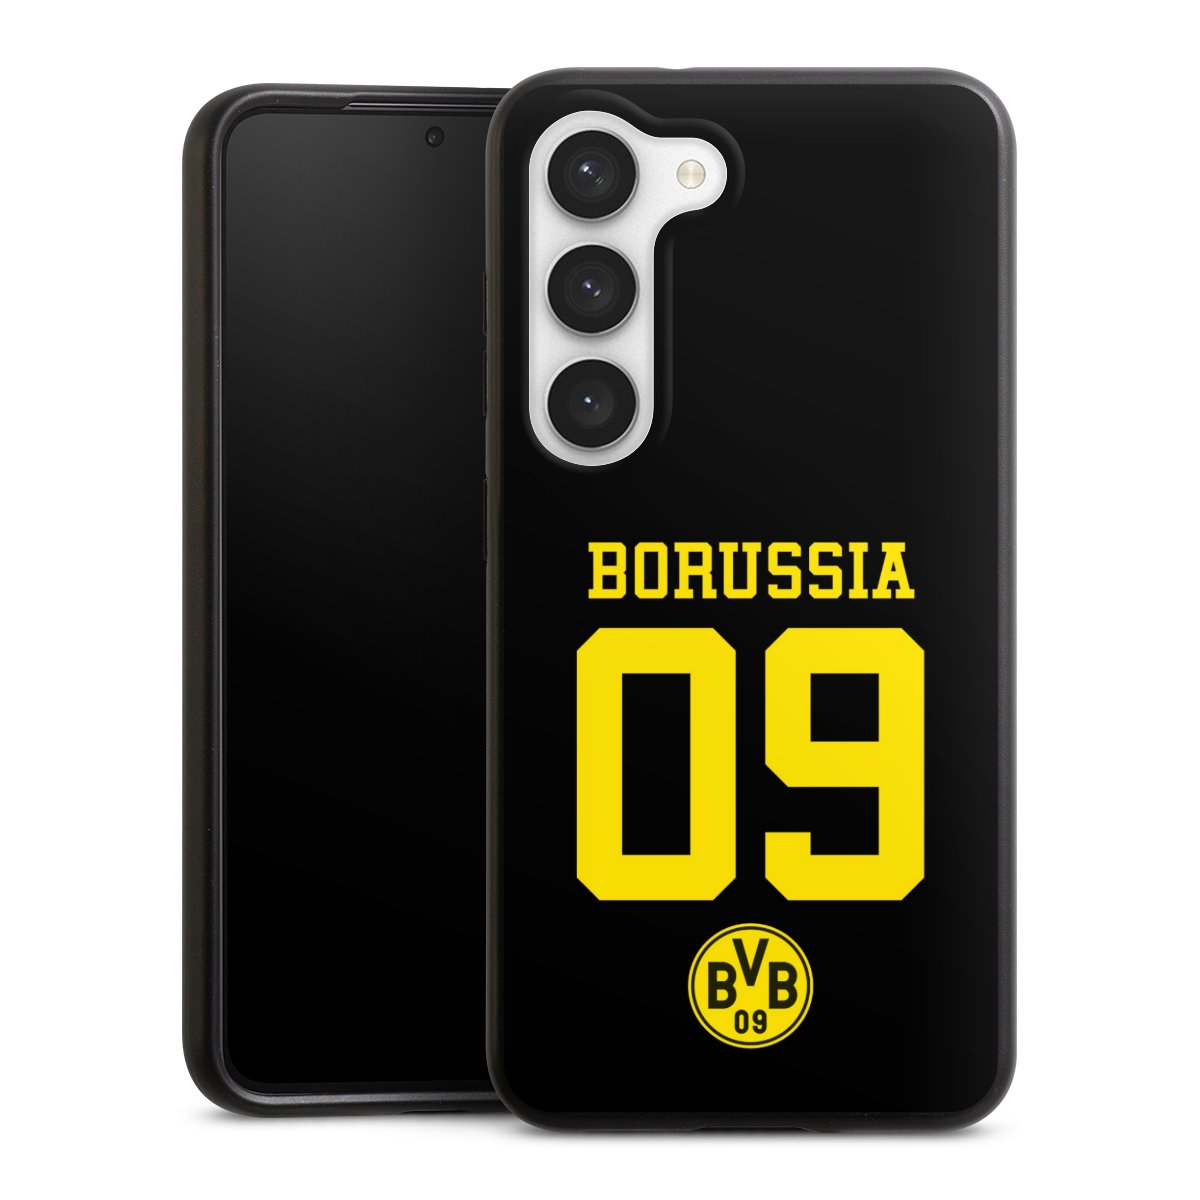 Borussia 09 Noir - BVB